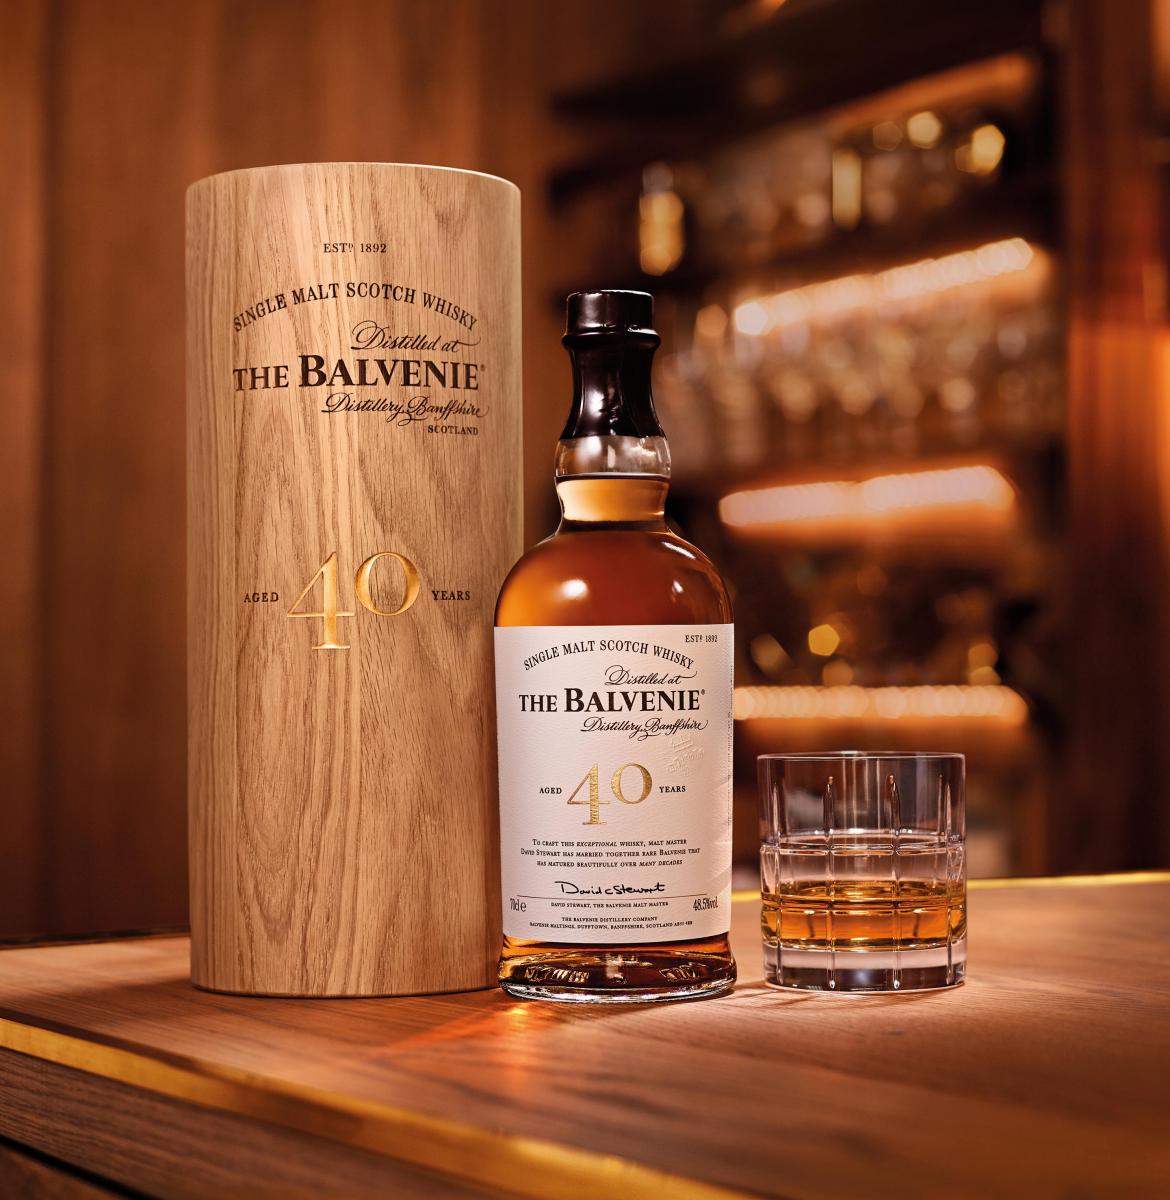 The Balvenie 40 Year Old Single Malt Scotch Whisky